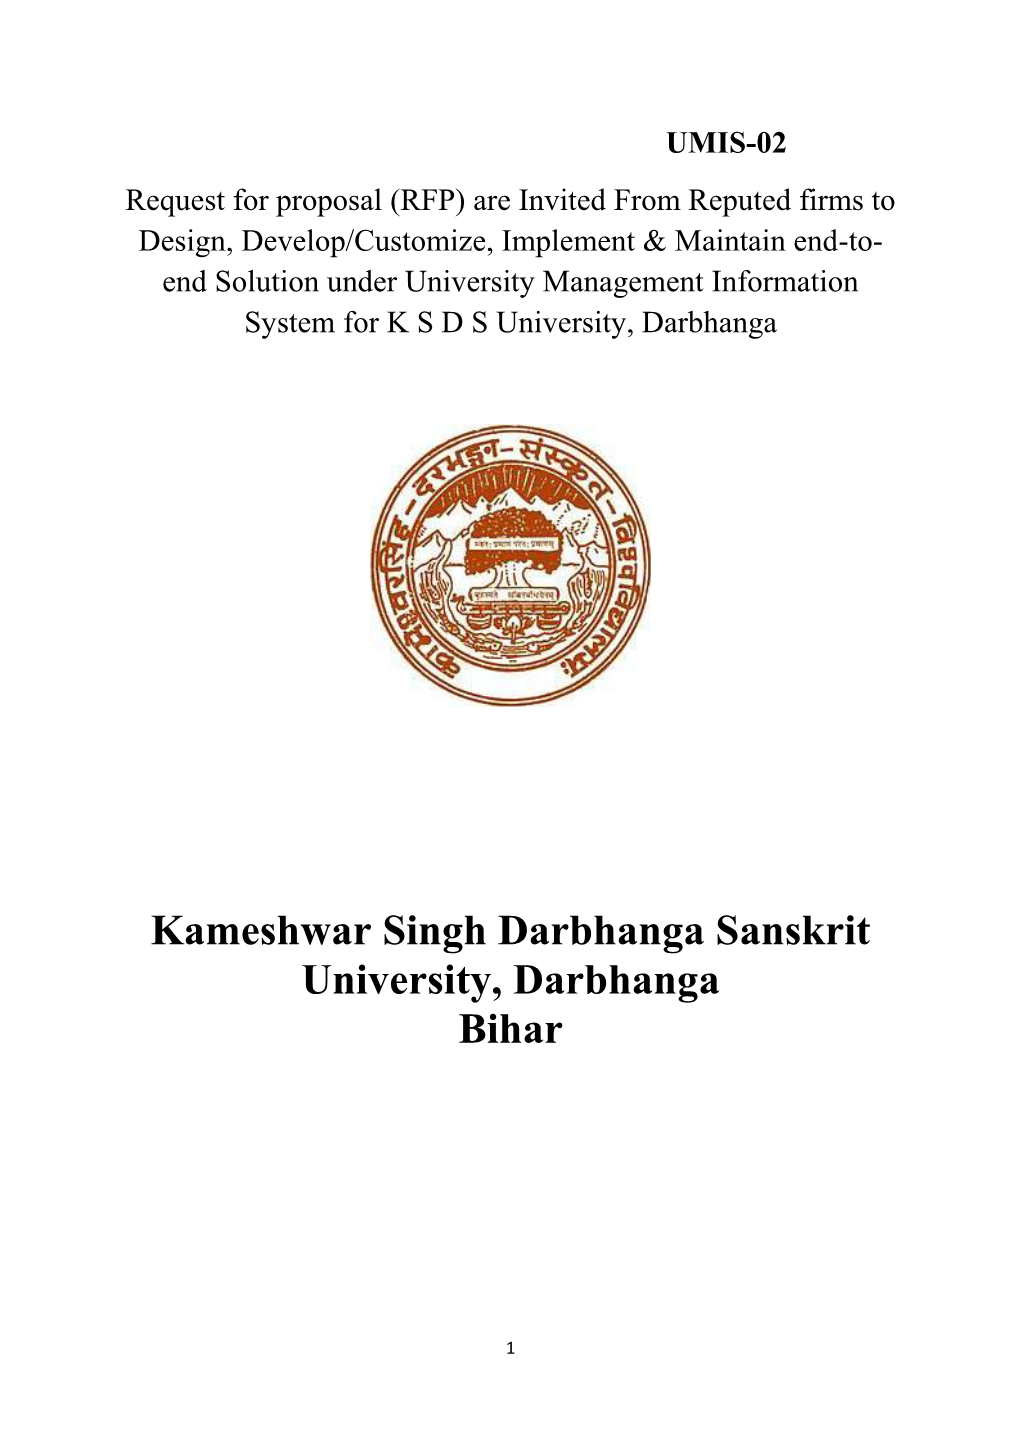 Kameshwar Singh Darbhanga Sanskrit University, Darbhanga Bihar